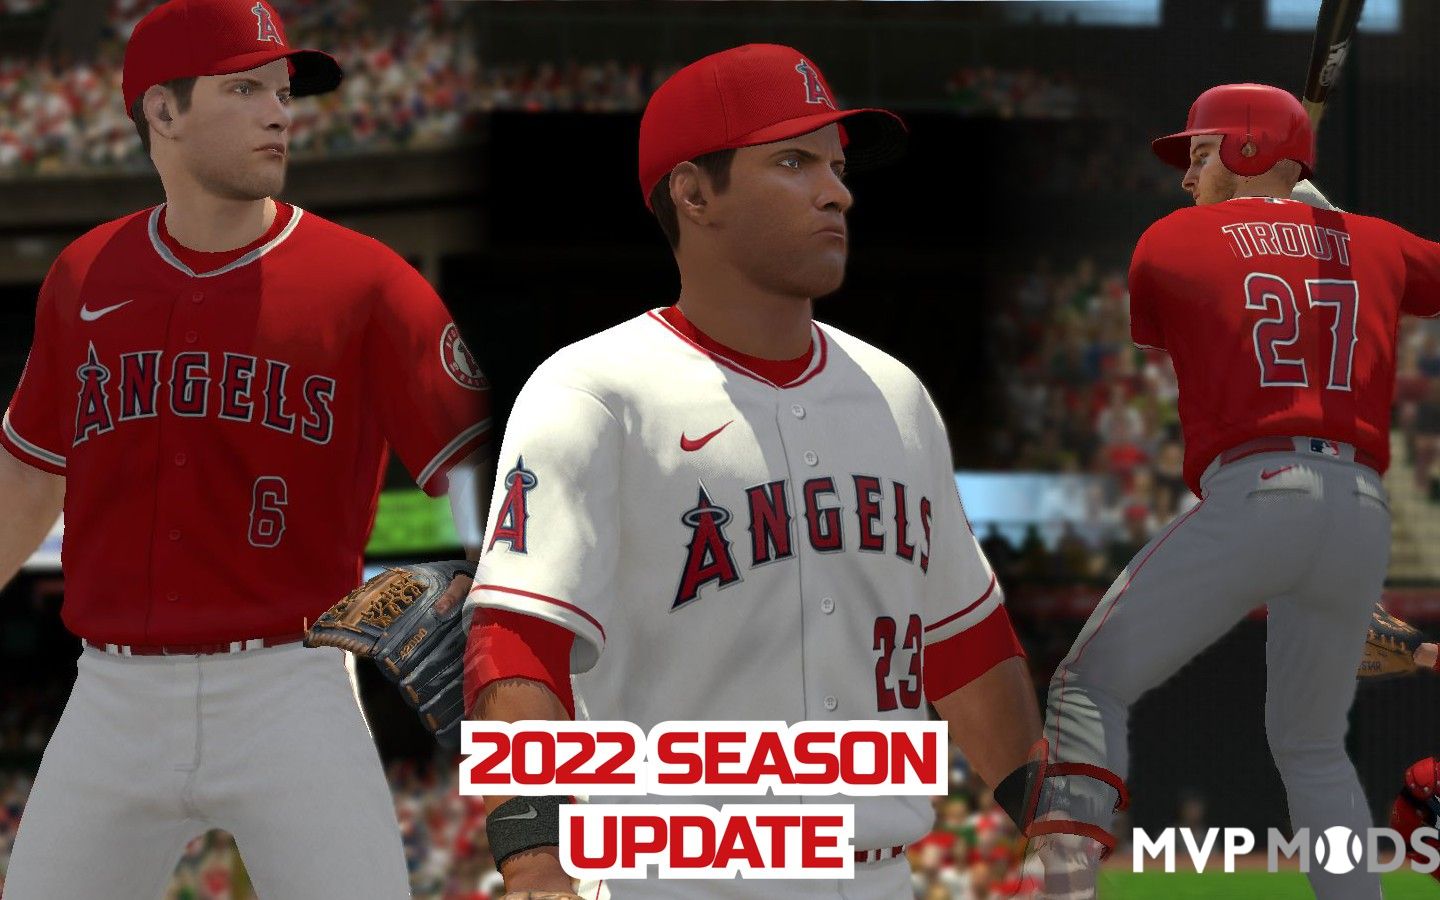 angels new uniforms 2022